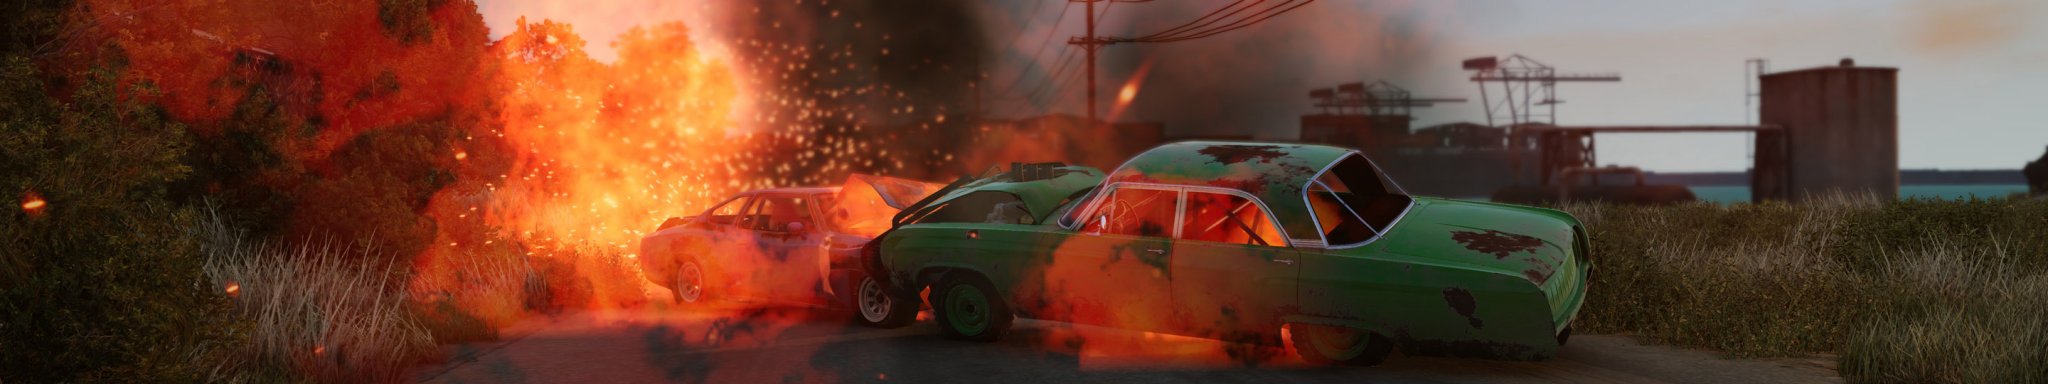 1 BeamNG 2 CAR FIRE EXPLOSIONS copy.jpg